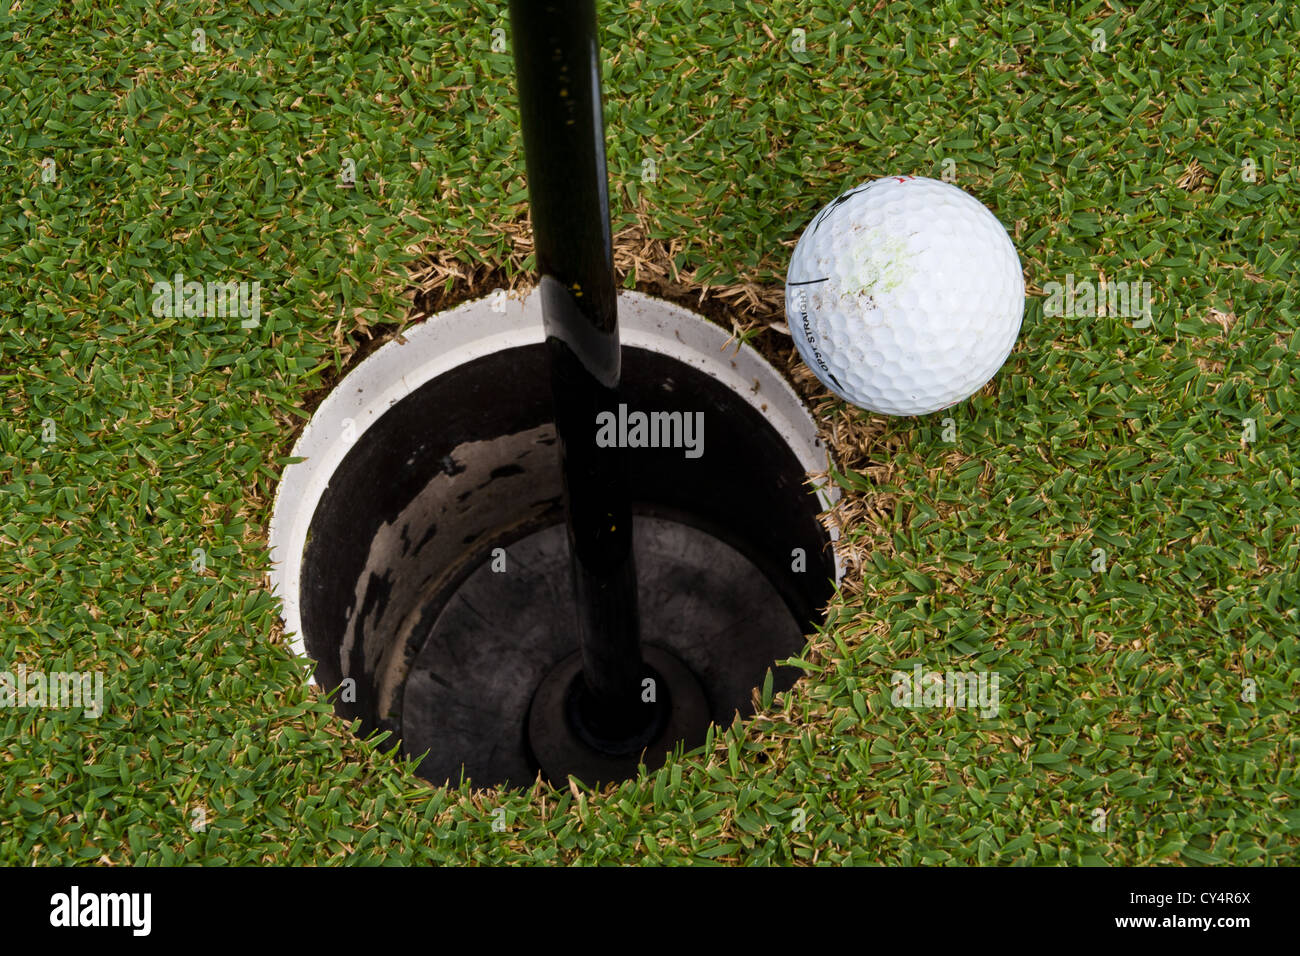 https://c8.alamy.com/comp/CY4R6X/the-golf-holes-golf-ball-close-to-the-hole-CY4R6X.jpg